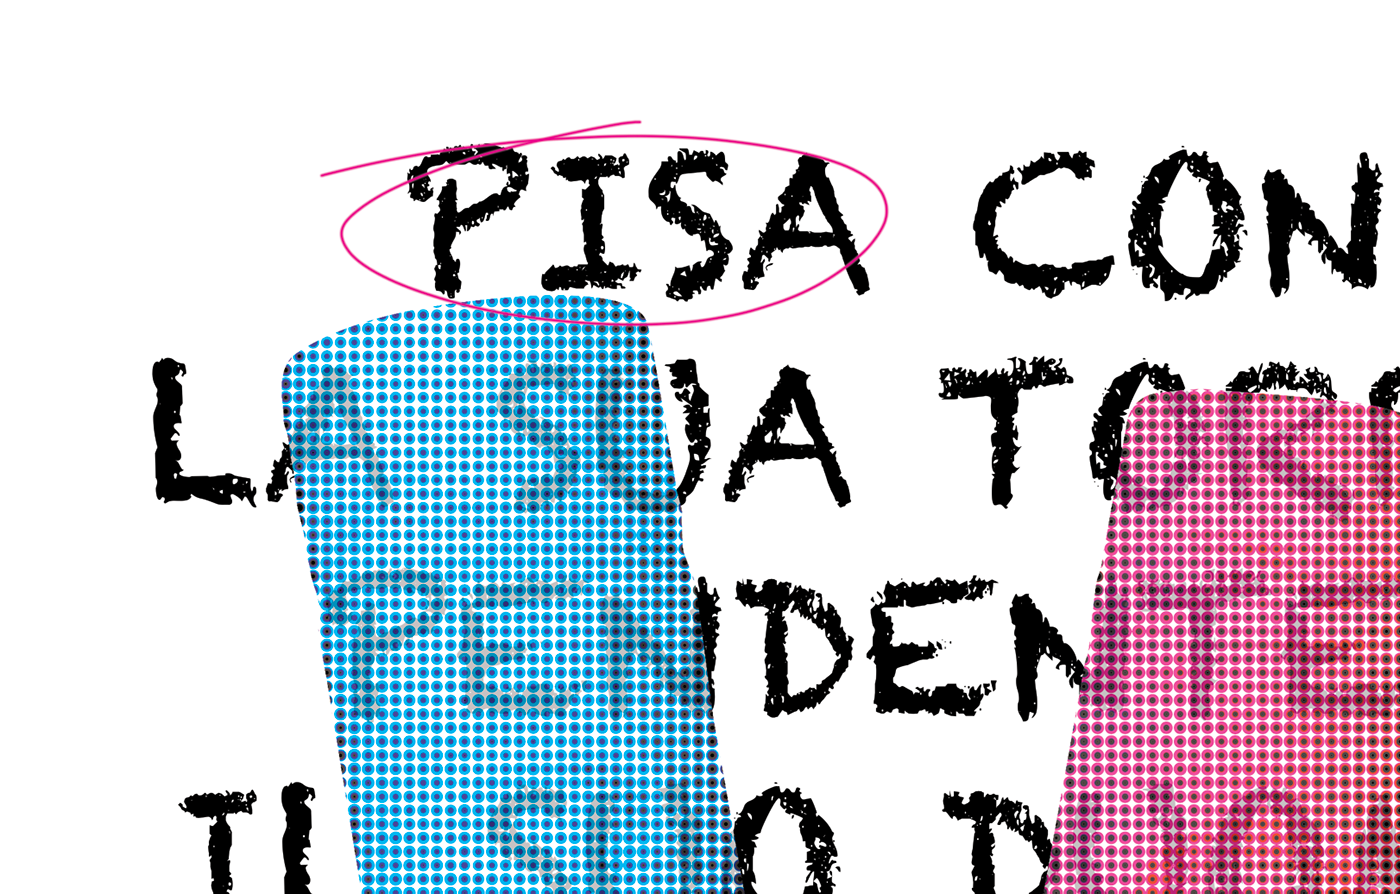 Two Leaning Towers Exhibition 2019 Pisa Exhibition  Poster Design Francesco Mazzenga china cina ILLUSTRATION 